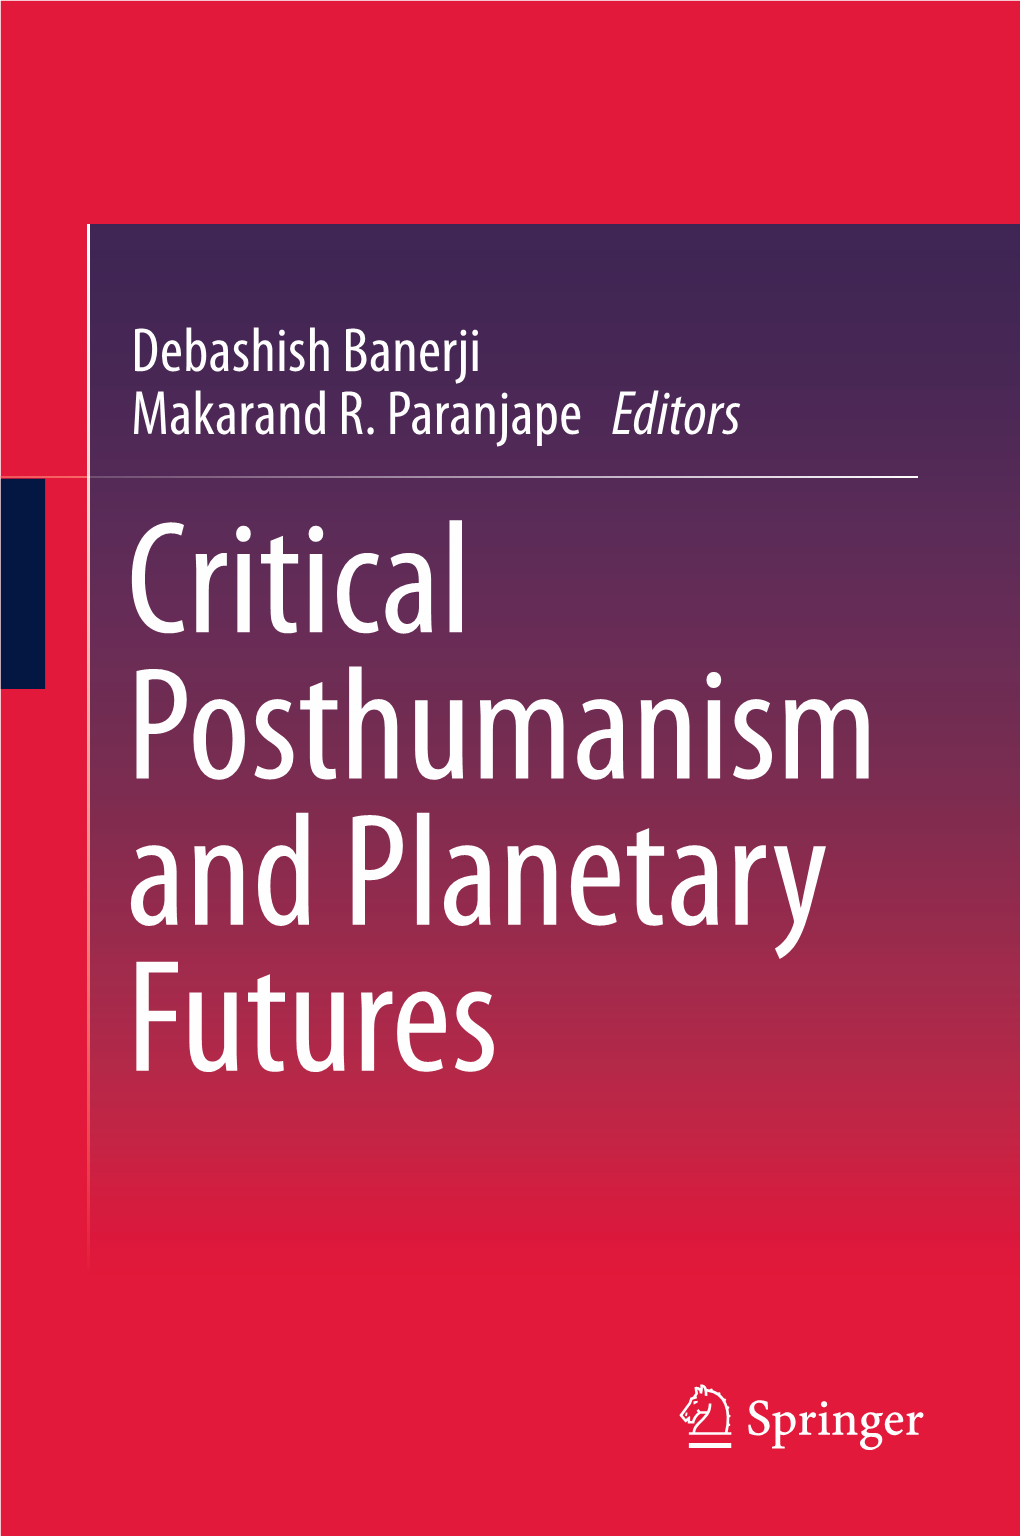 Debashish Banerji Makarand R. Paranjape Editors Critical Posthumanism and Planetary Futures Critical Posthumanism and Planetary Futures Debashish Banerji • Makarand R